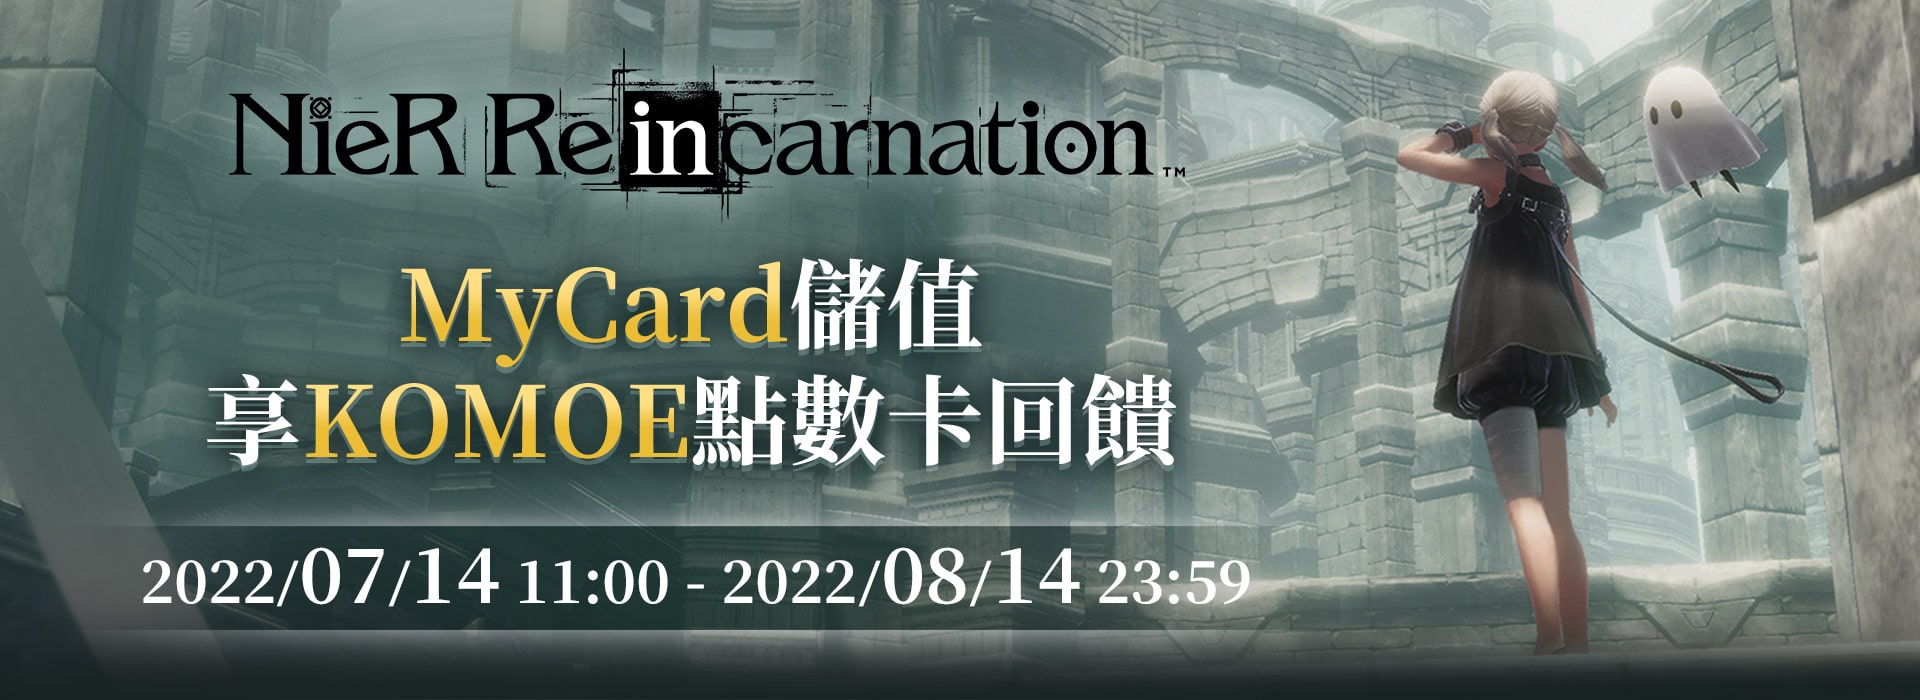   《NieR Re[in]carnation》MyCard儲值享KOMOE點數卡回饋 | 中華電信